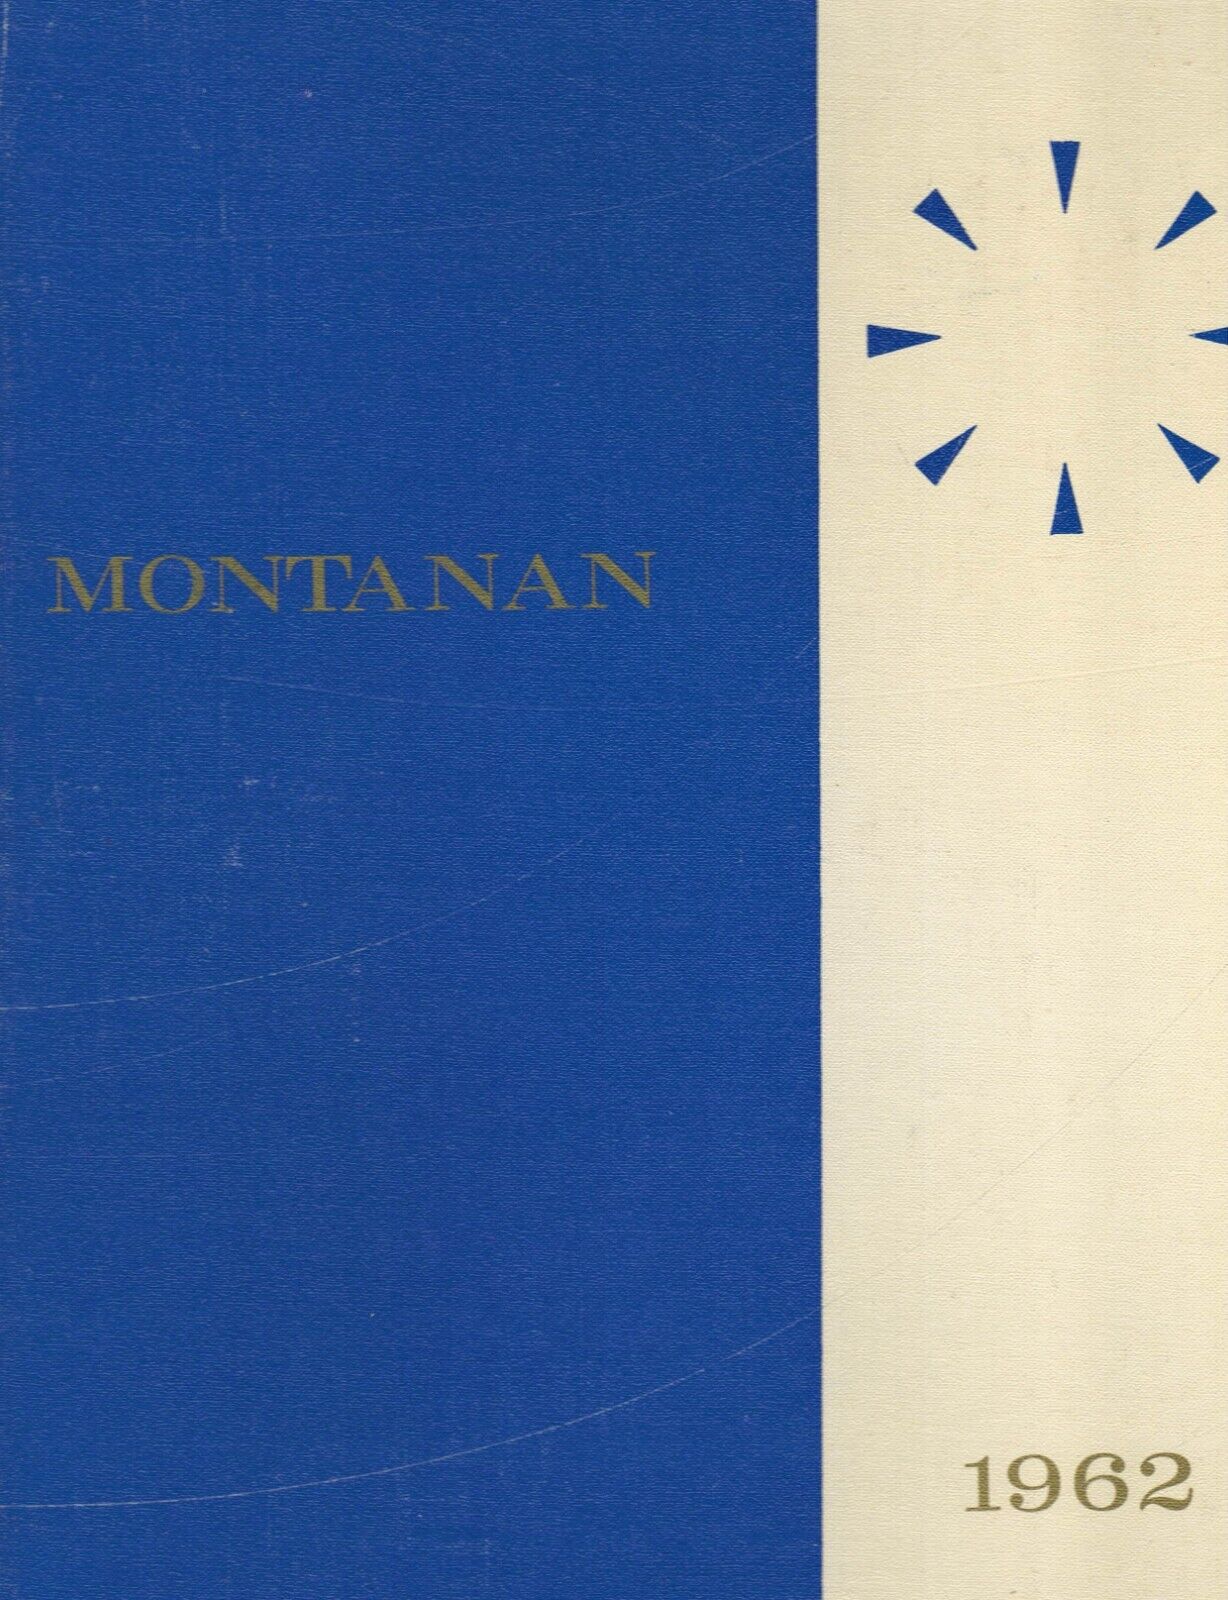 1962 Montana State College / University Yearbook Annual Montanan Bozeman MT